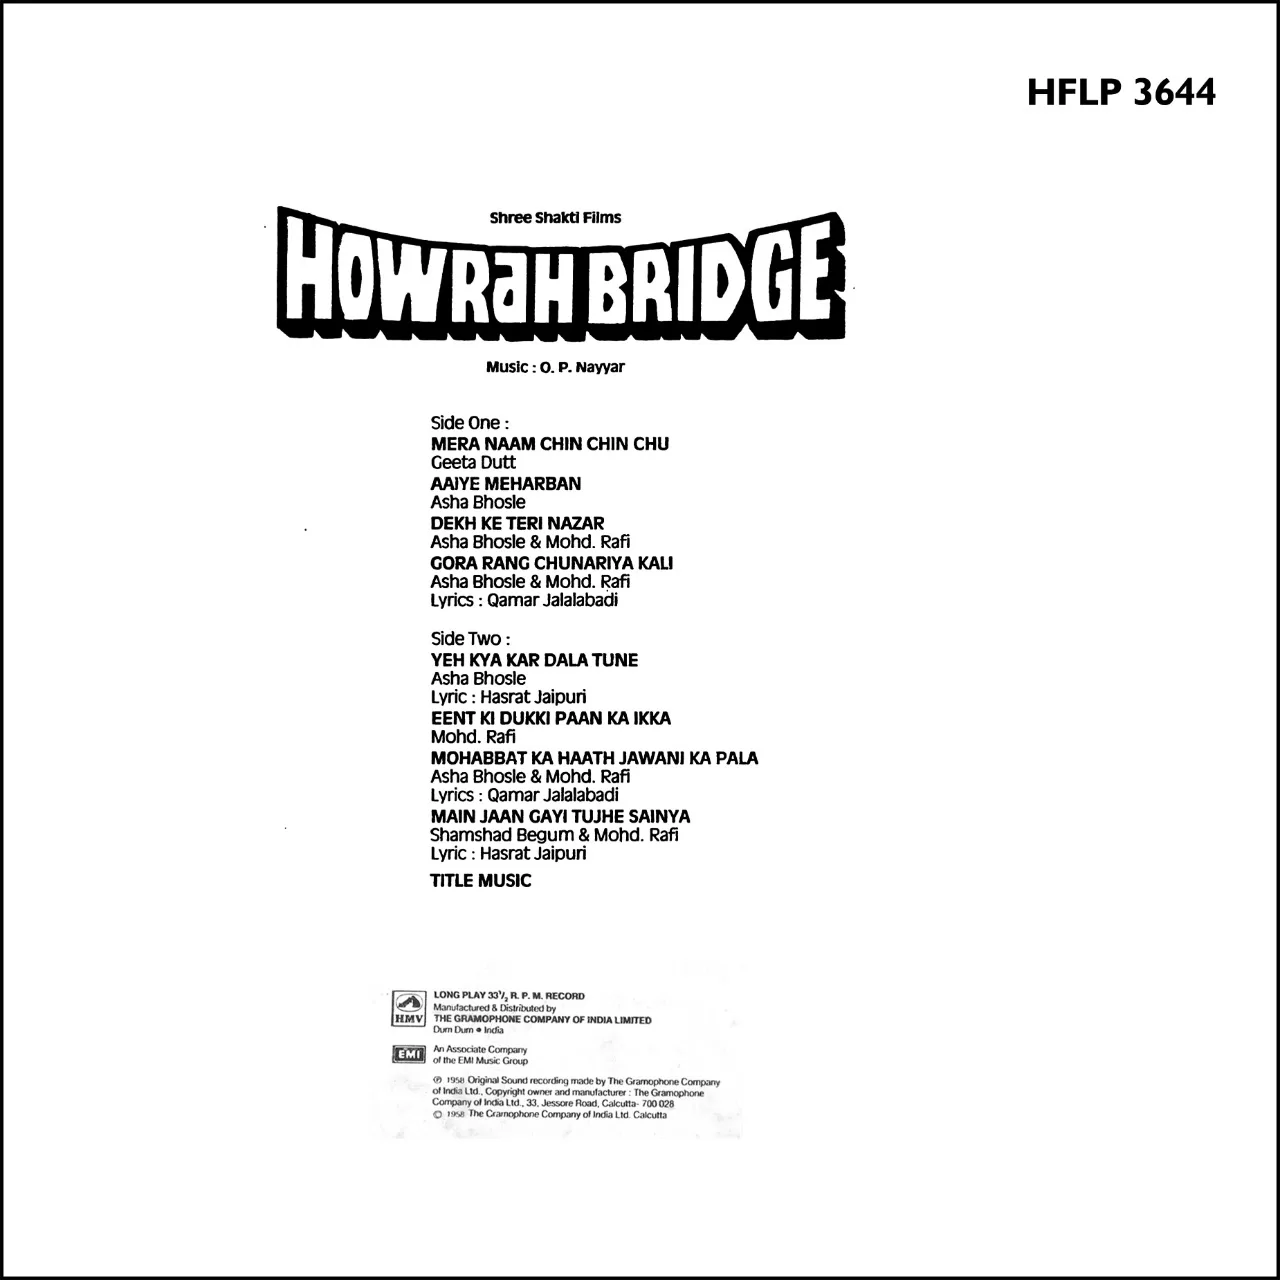 Howrah Bridge - HFLP 3644 - (Condition - 85-90%) - Cover Reprinted 